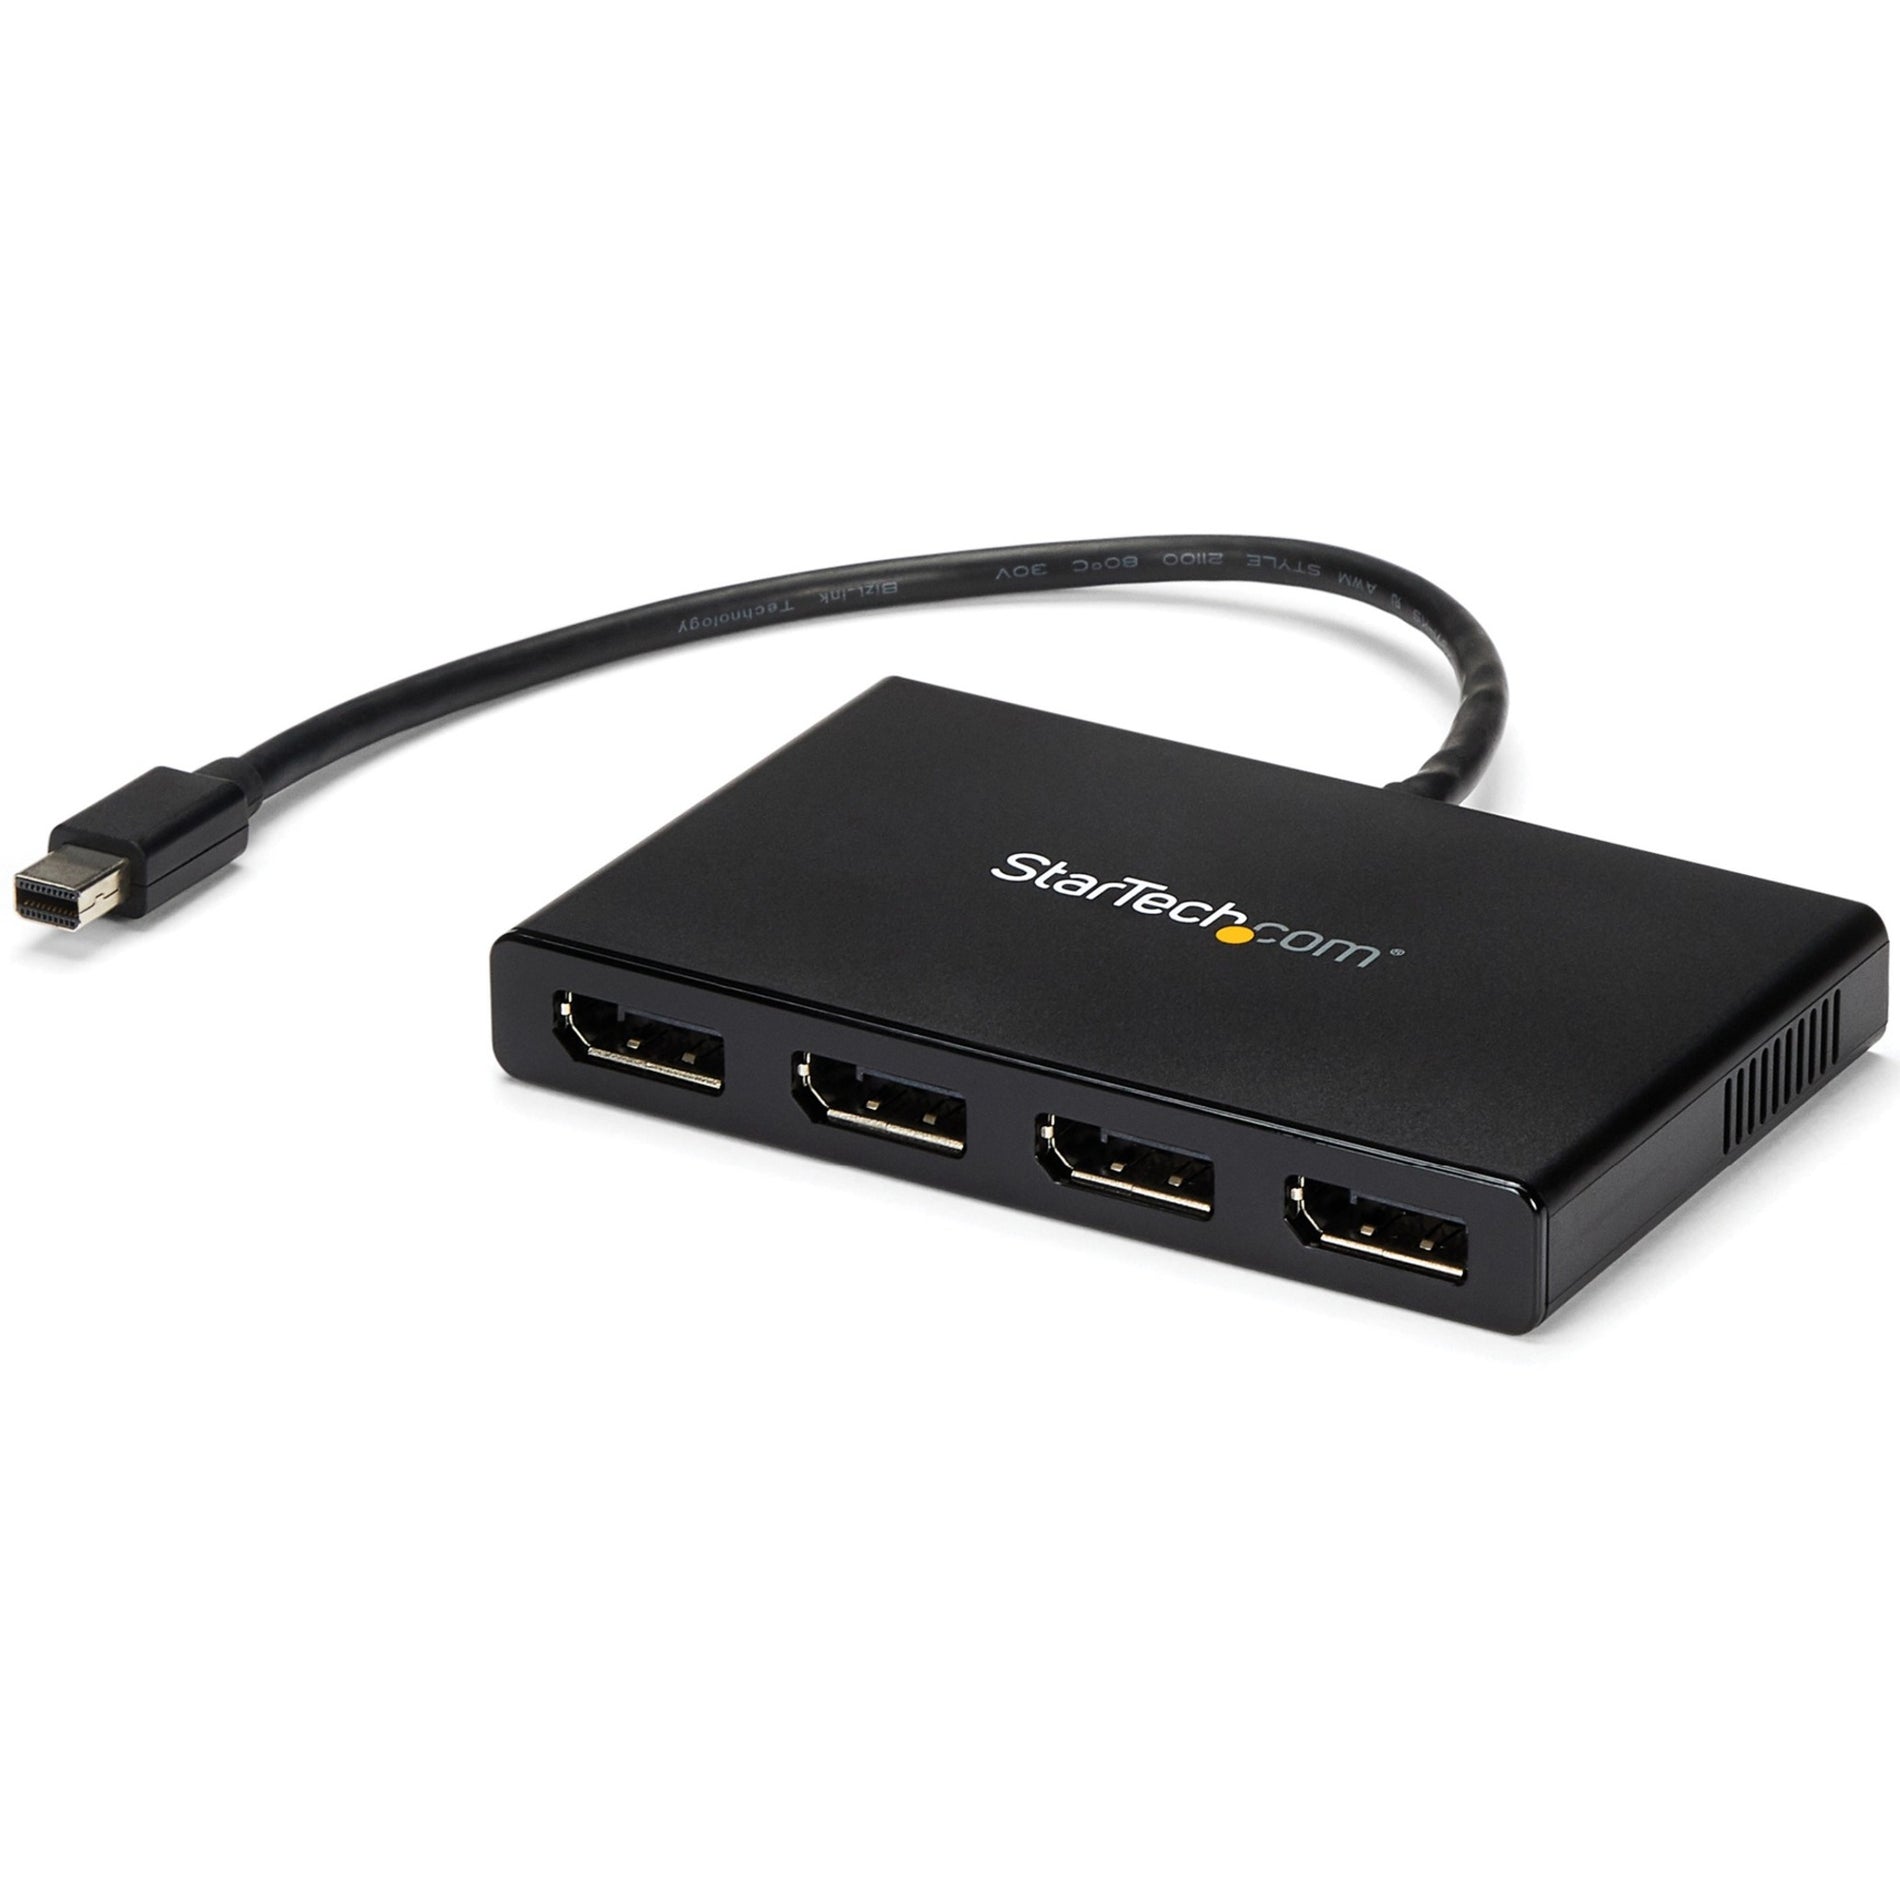 StarTech.com MSTMDP124DP MST Hub - Mini DisplayPort to 4x DisplayPort, Multi-Stream Transport Hub - Connect 4 Monitors, 4K Resolution Support [Discontinued]